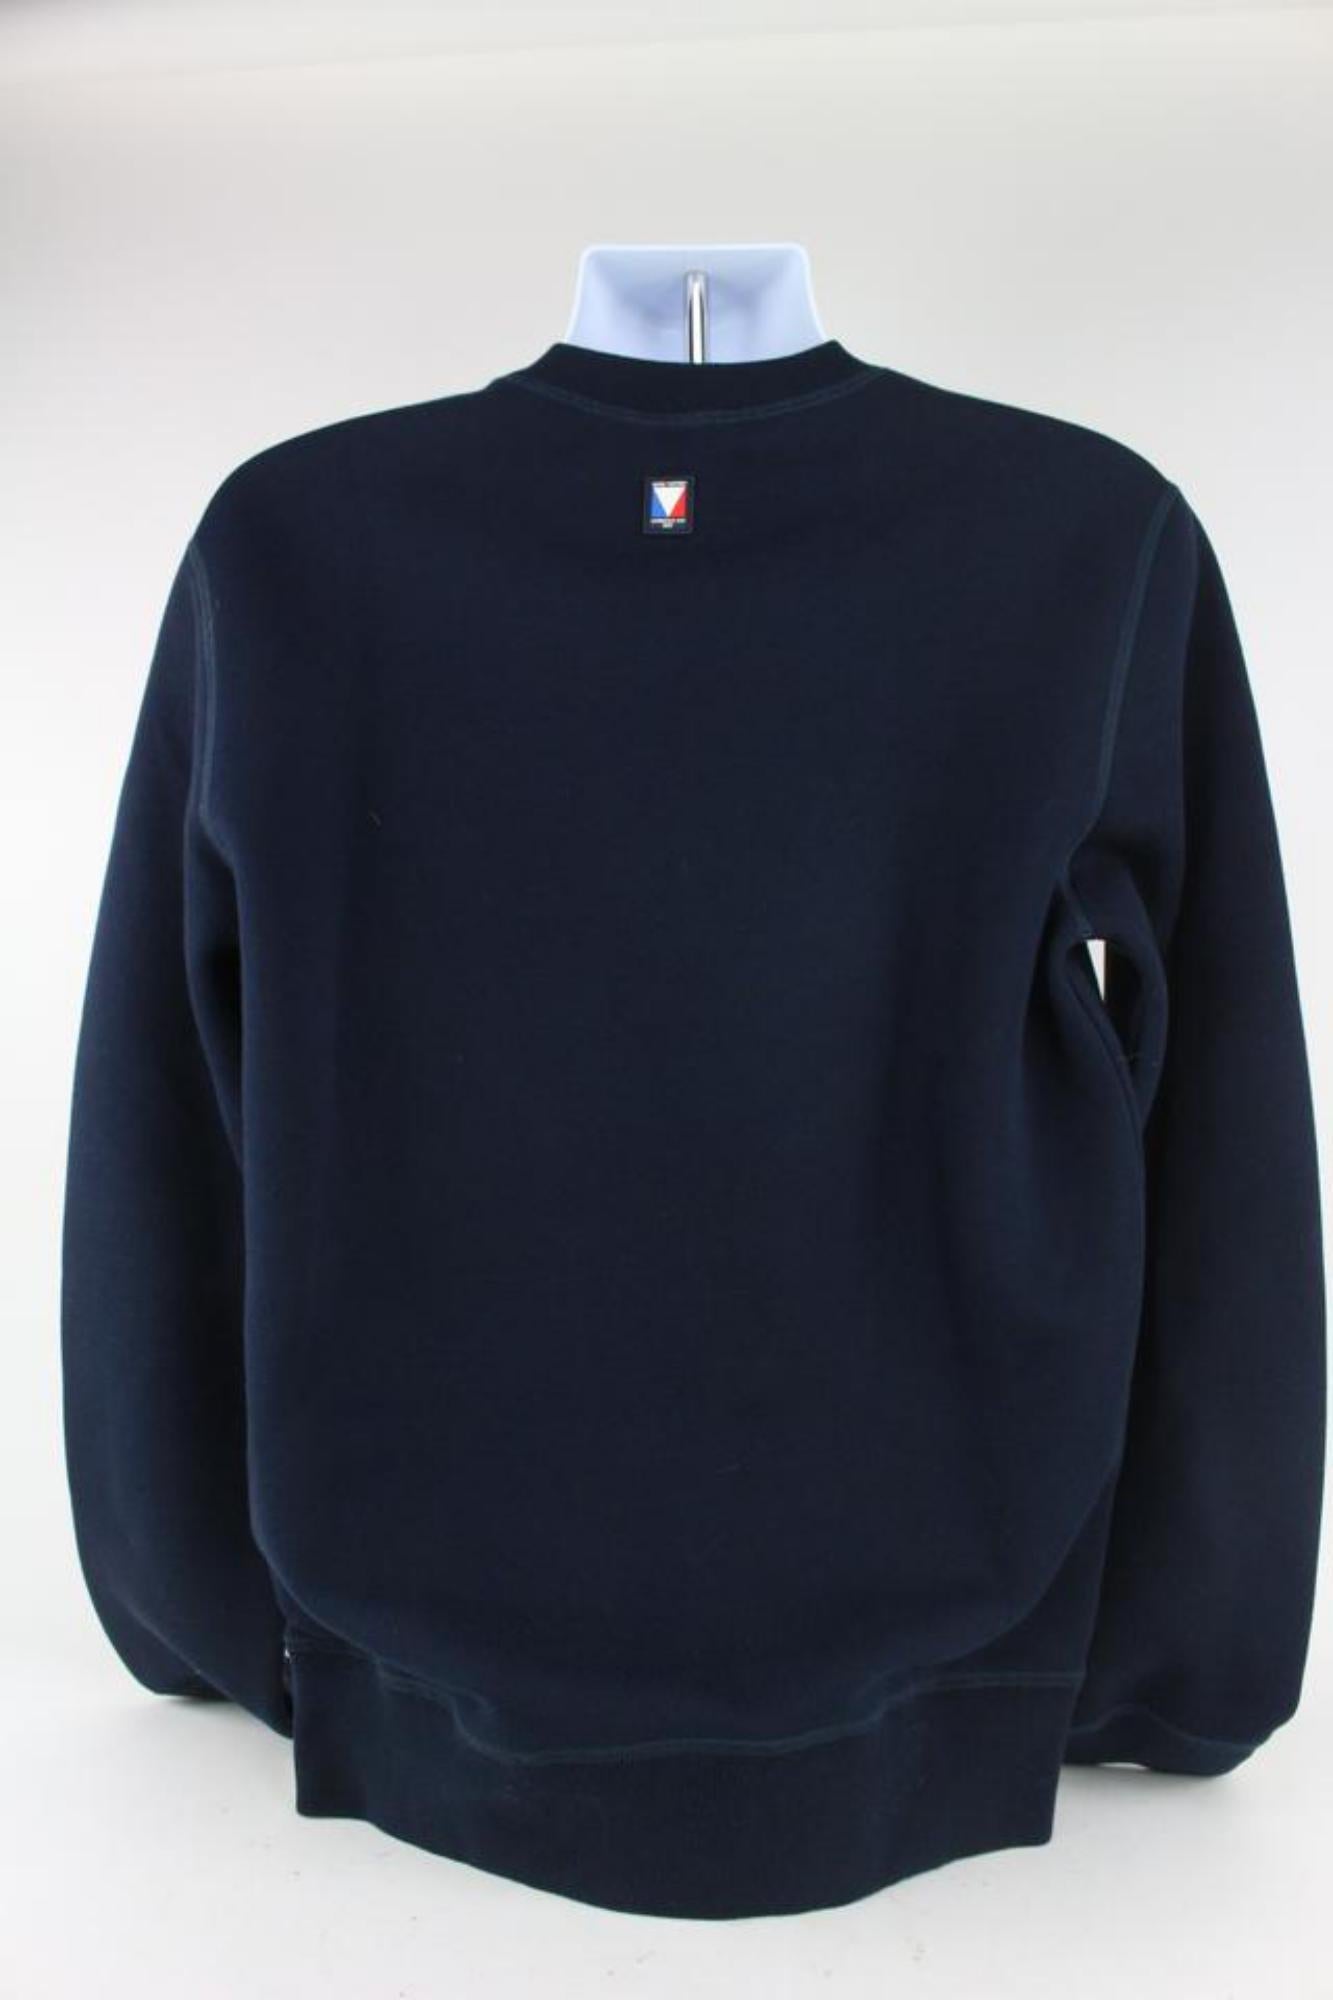 Louis Vuitton Men's Large Navy Blue LV America's Cup Crewneck Sweater 928lv65 For Sale 4